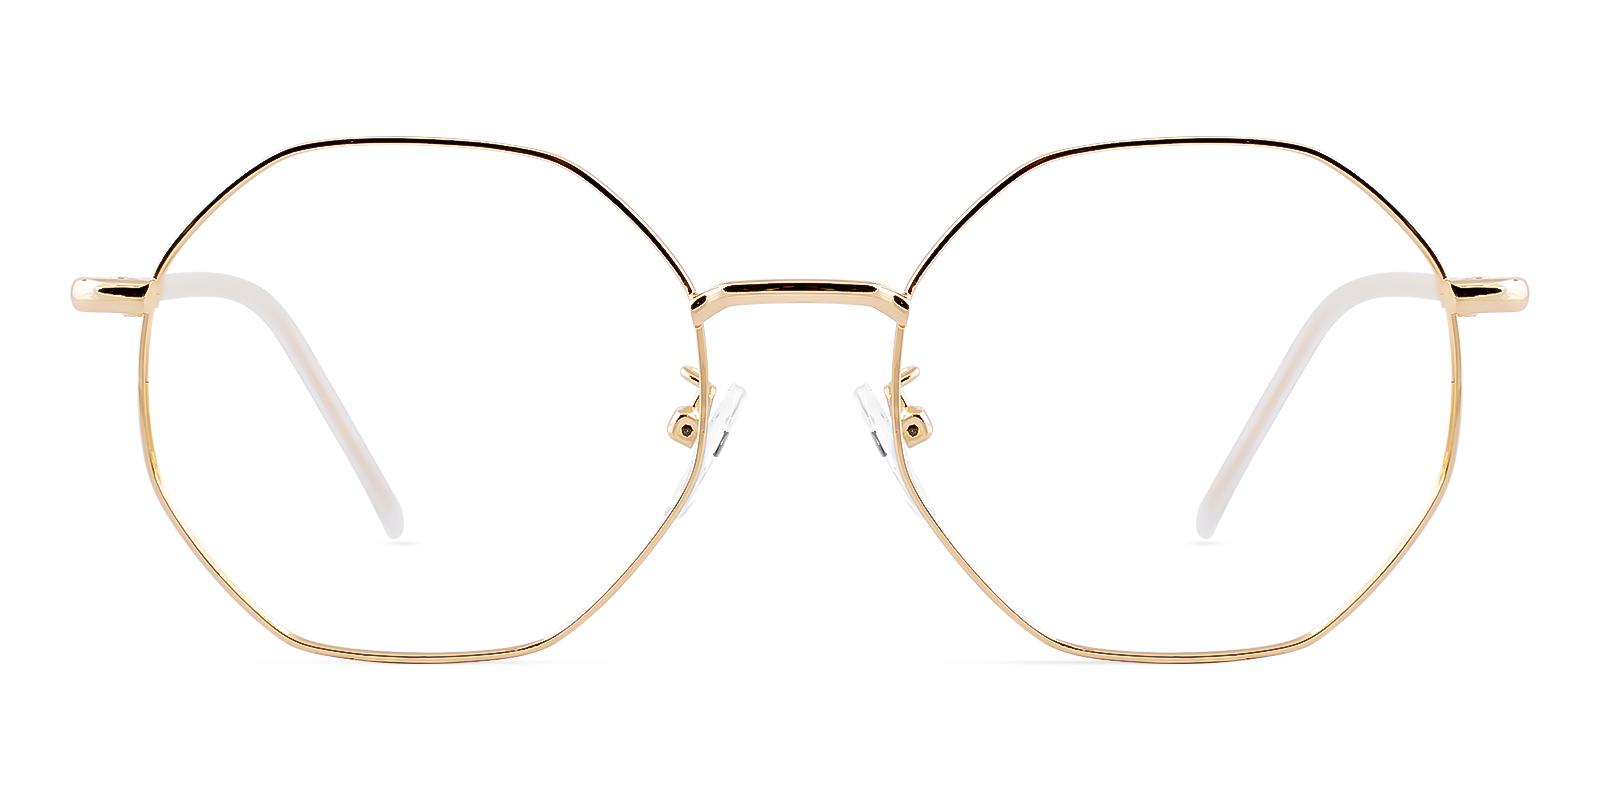 Udin Gold Metal Eyeglasses , NosePads Frames from ABBE Glasses